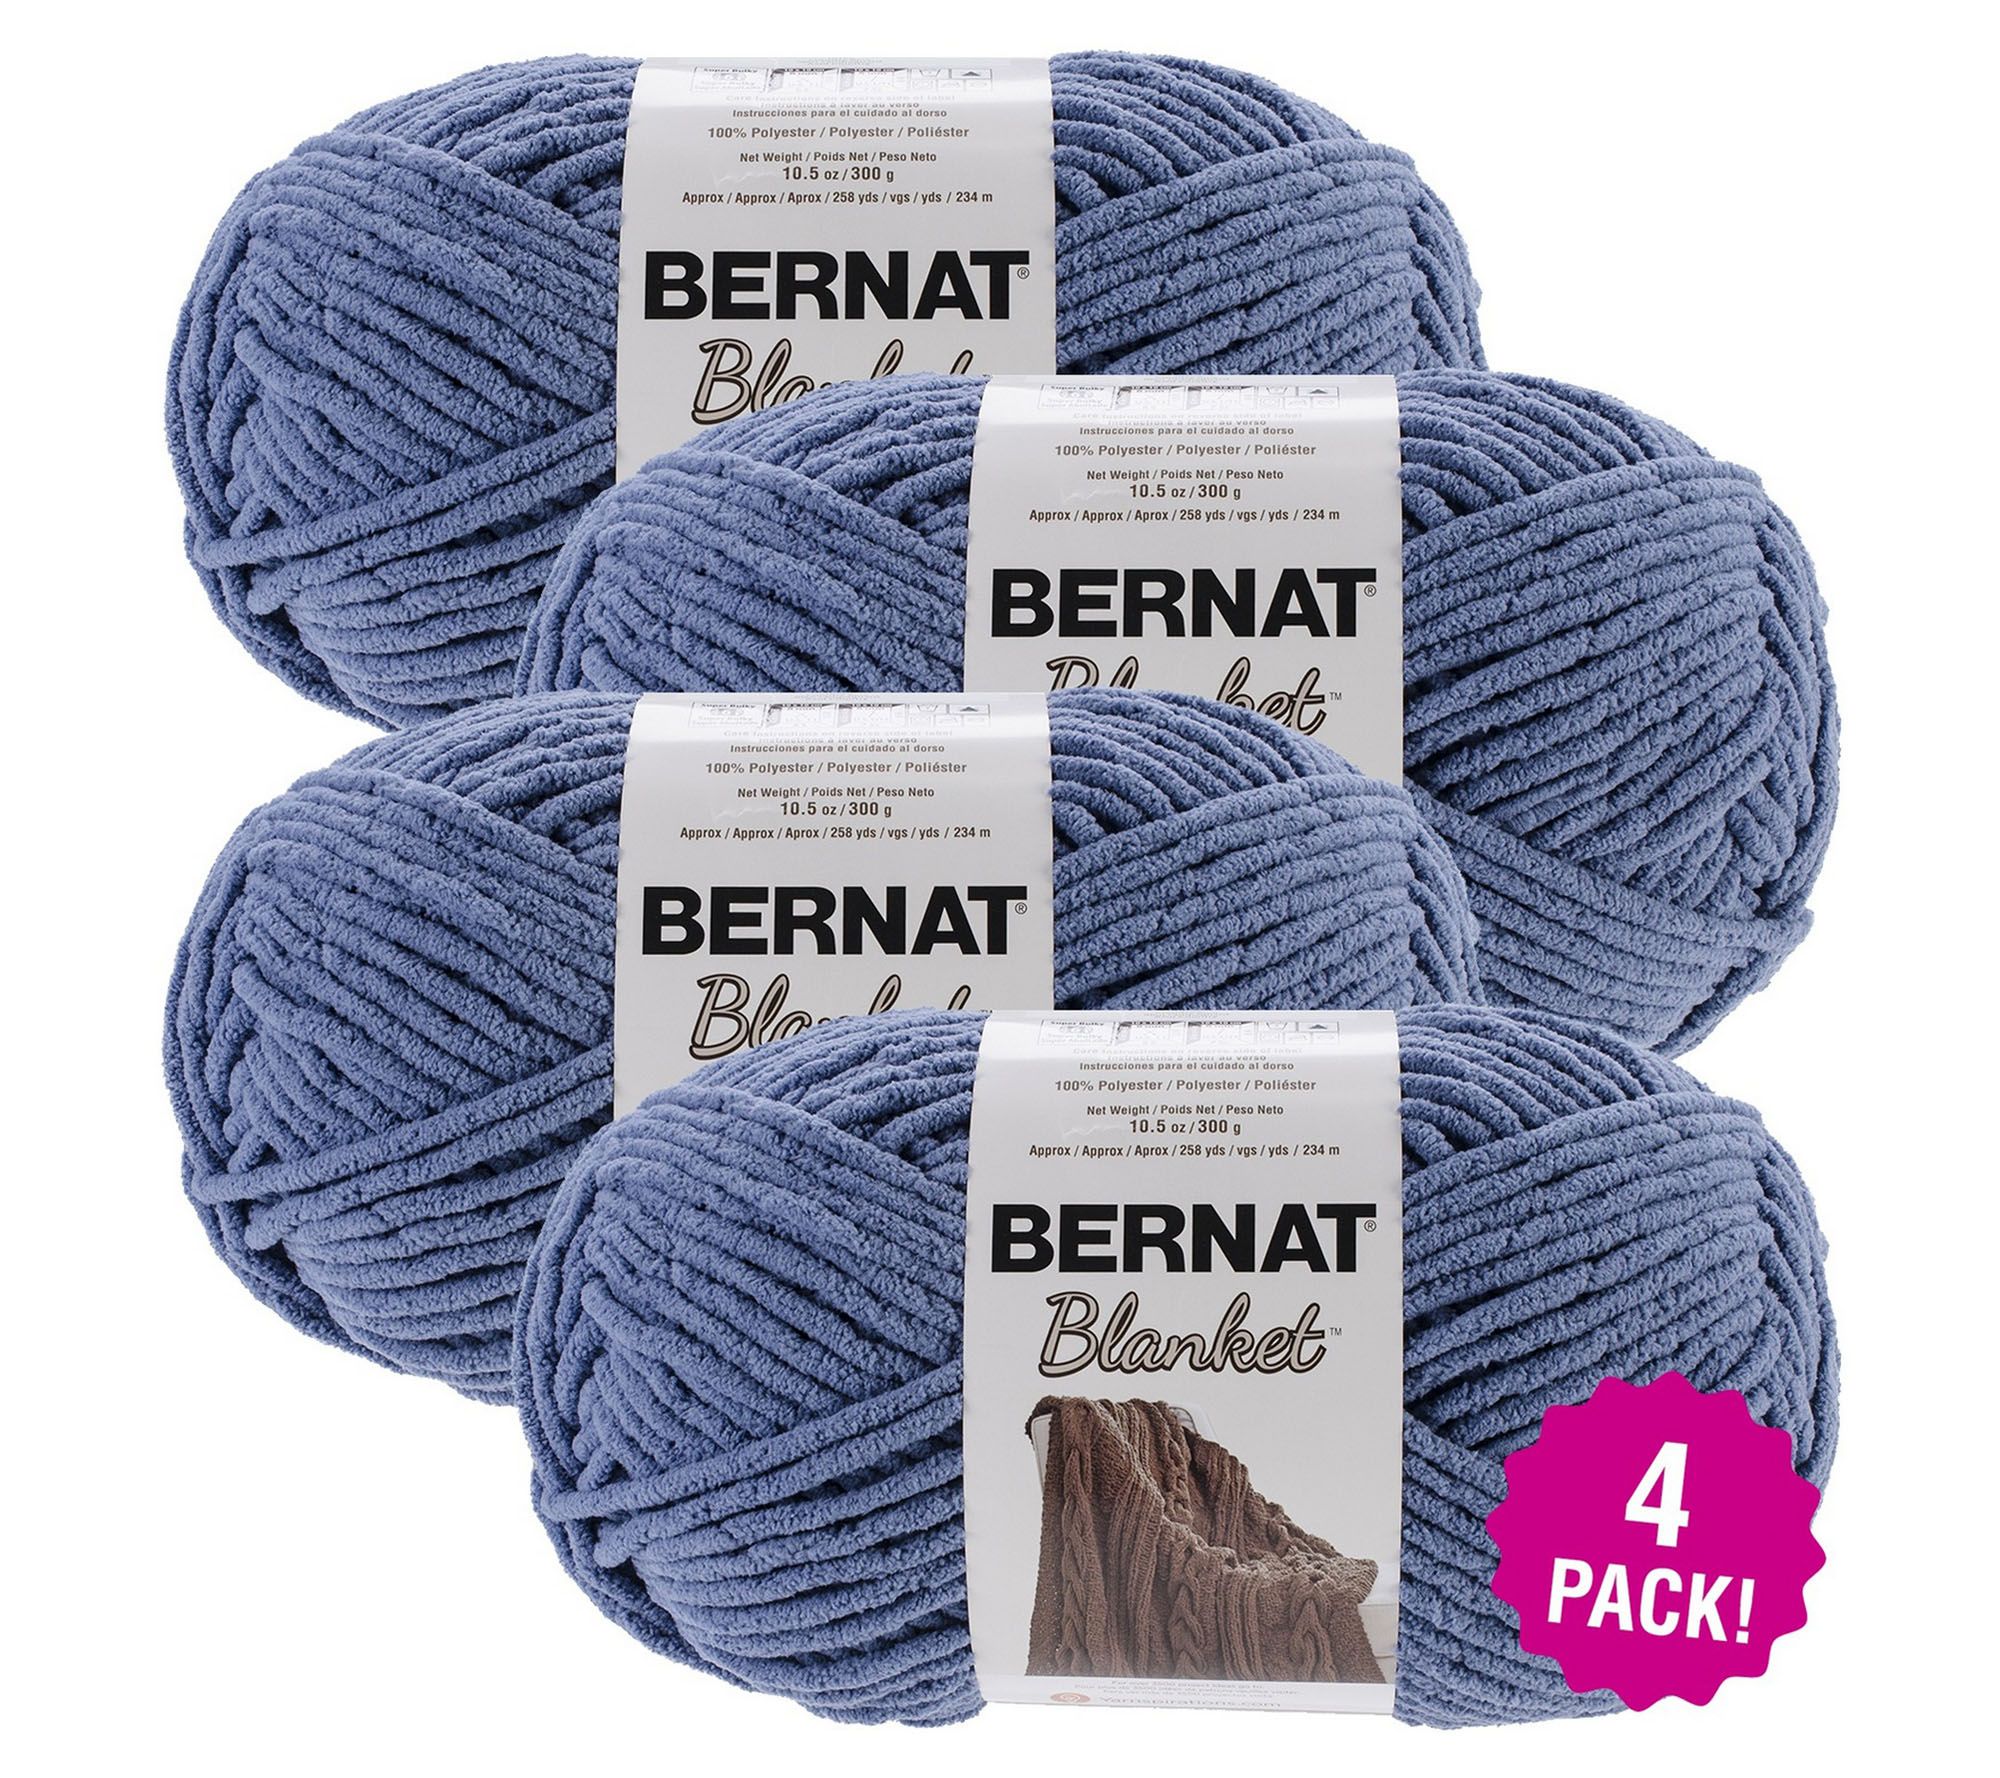  Bernat Blanket Yarn-Country Blue